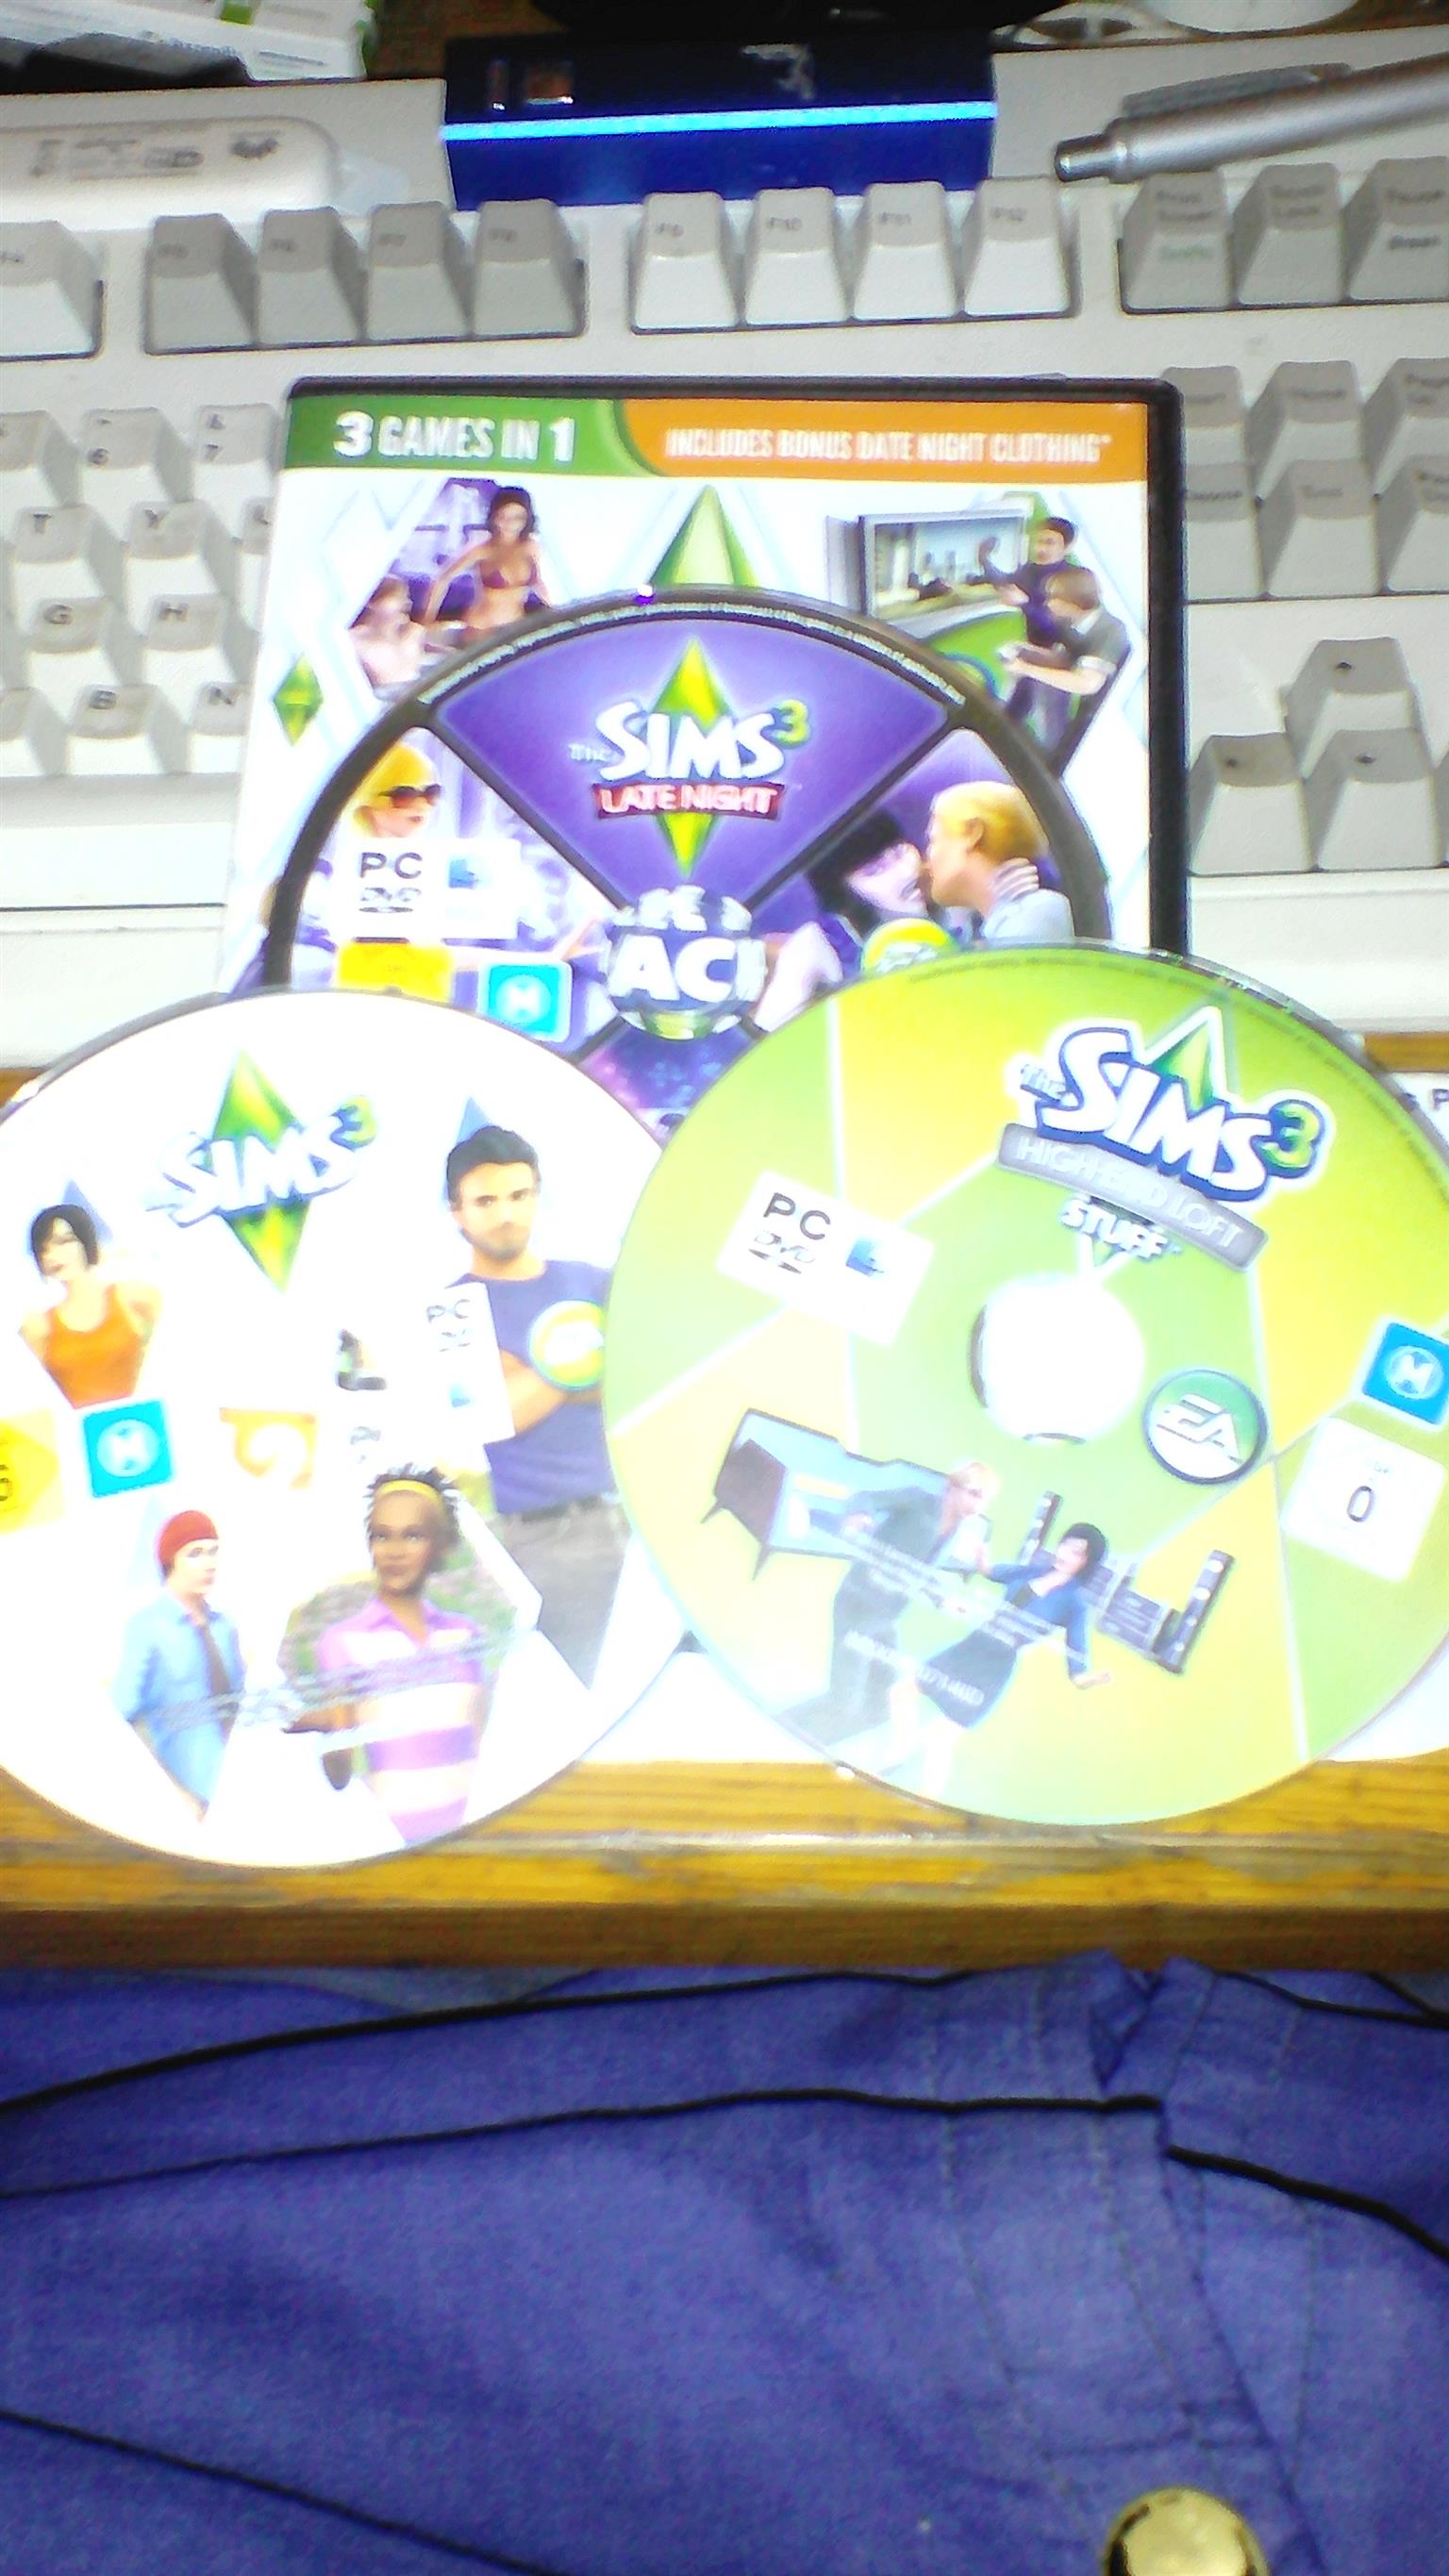 The Sims 3 Starter Bundle